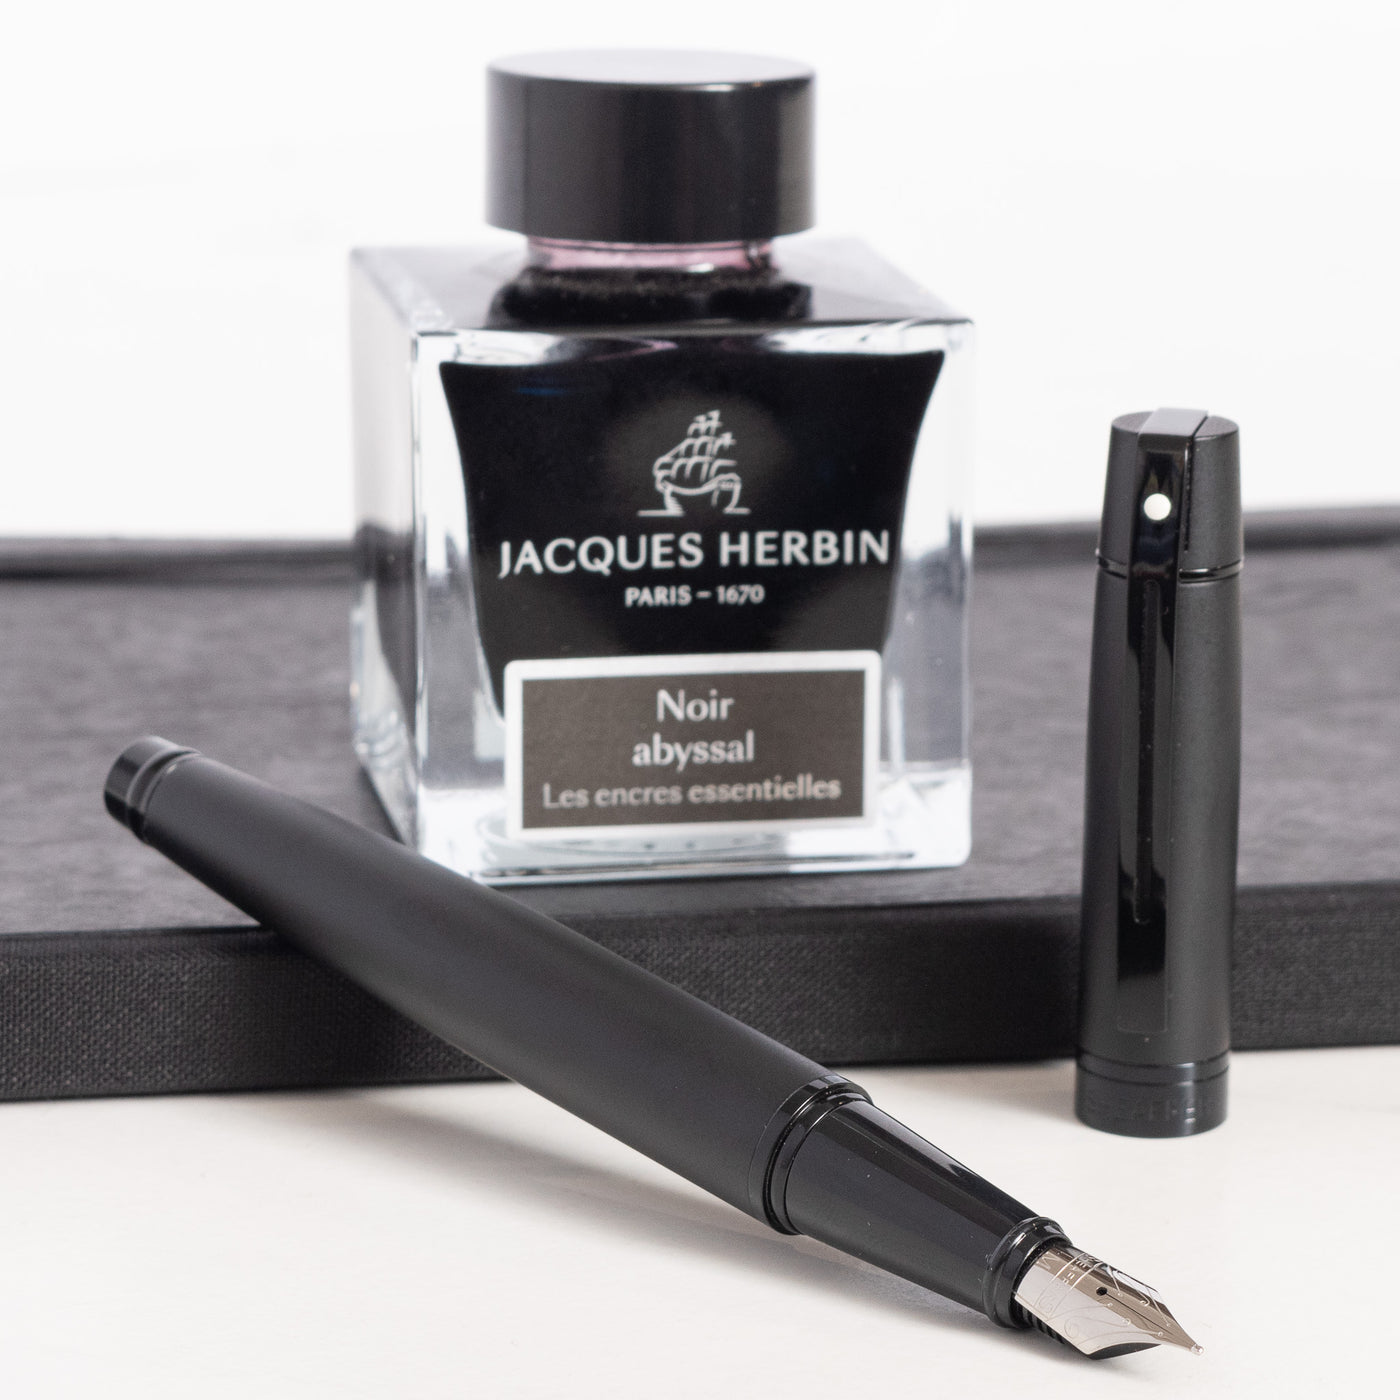 Sheaffer 300 Fountain Pen - Black with Black Trim uncapped